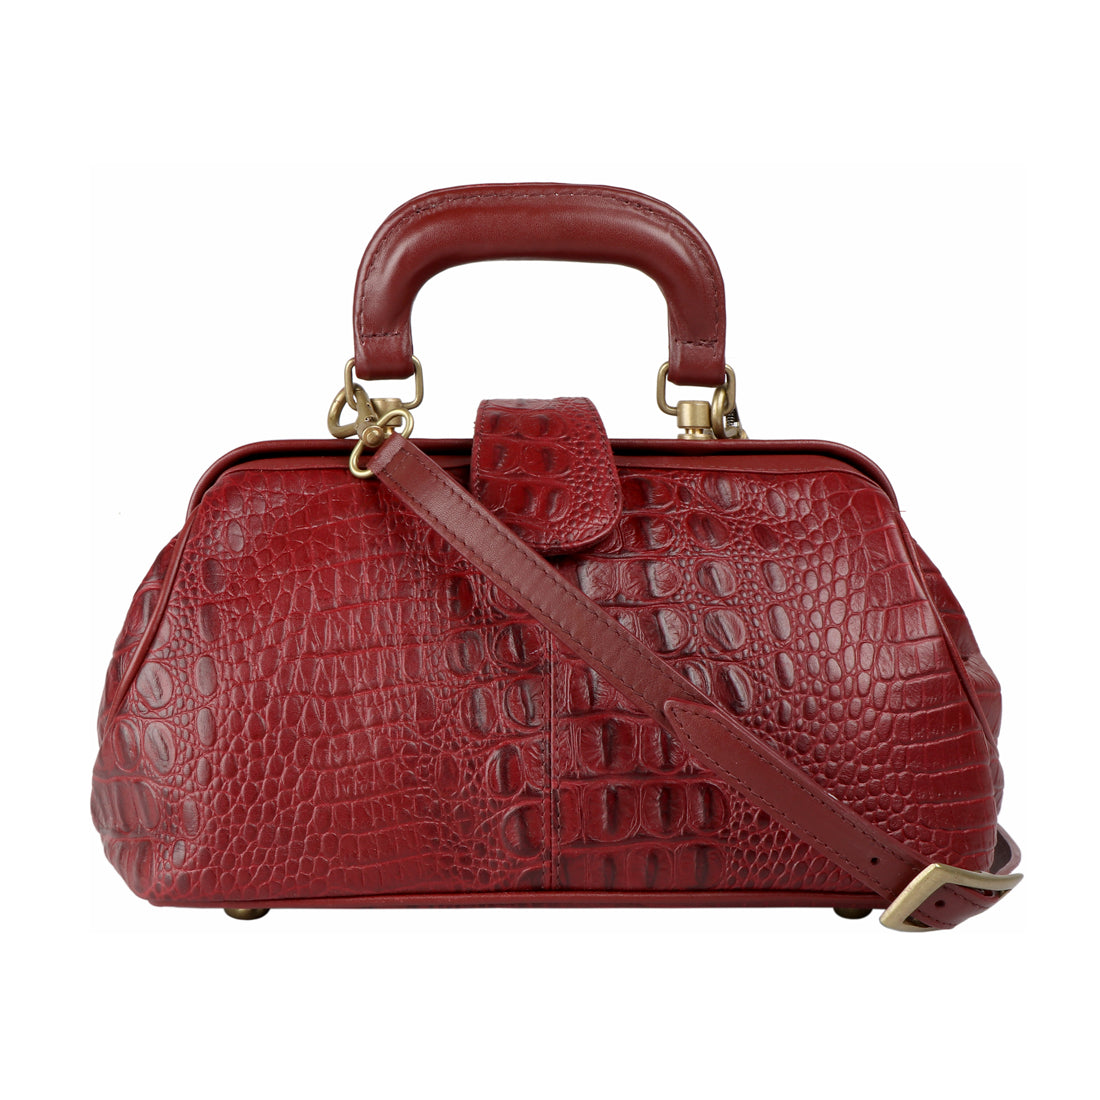 Buy Genuine, Handcrafted Leather Handbags For Women Online - Hidesign